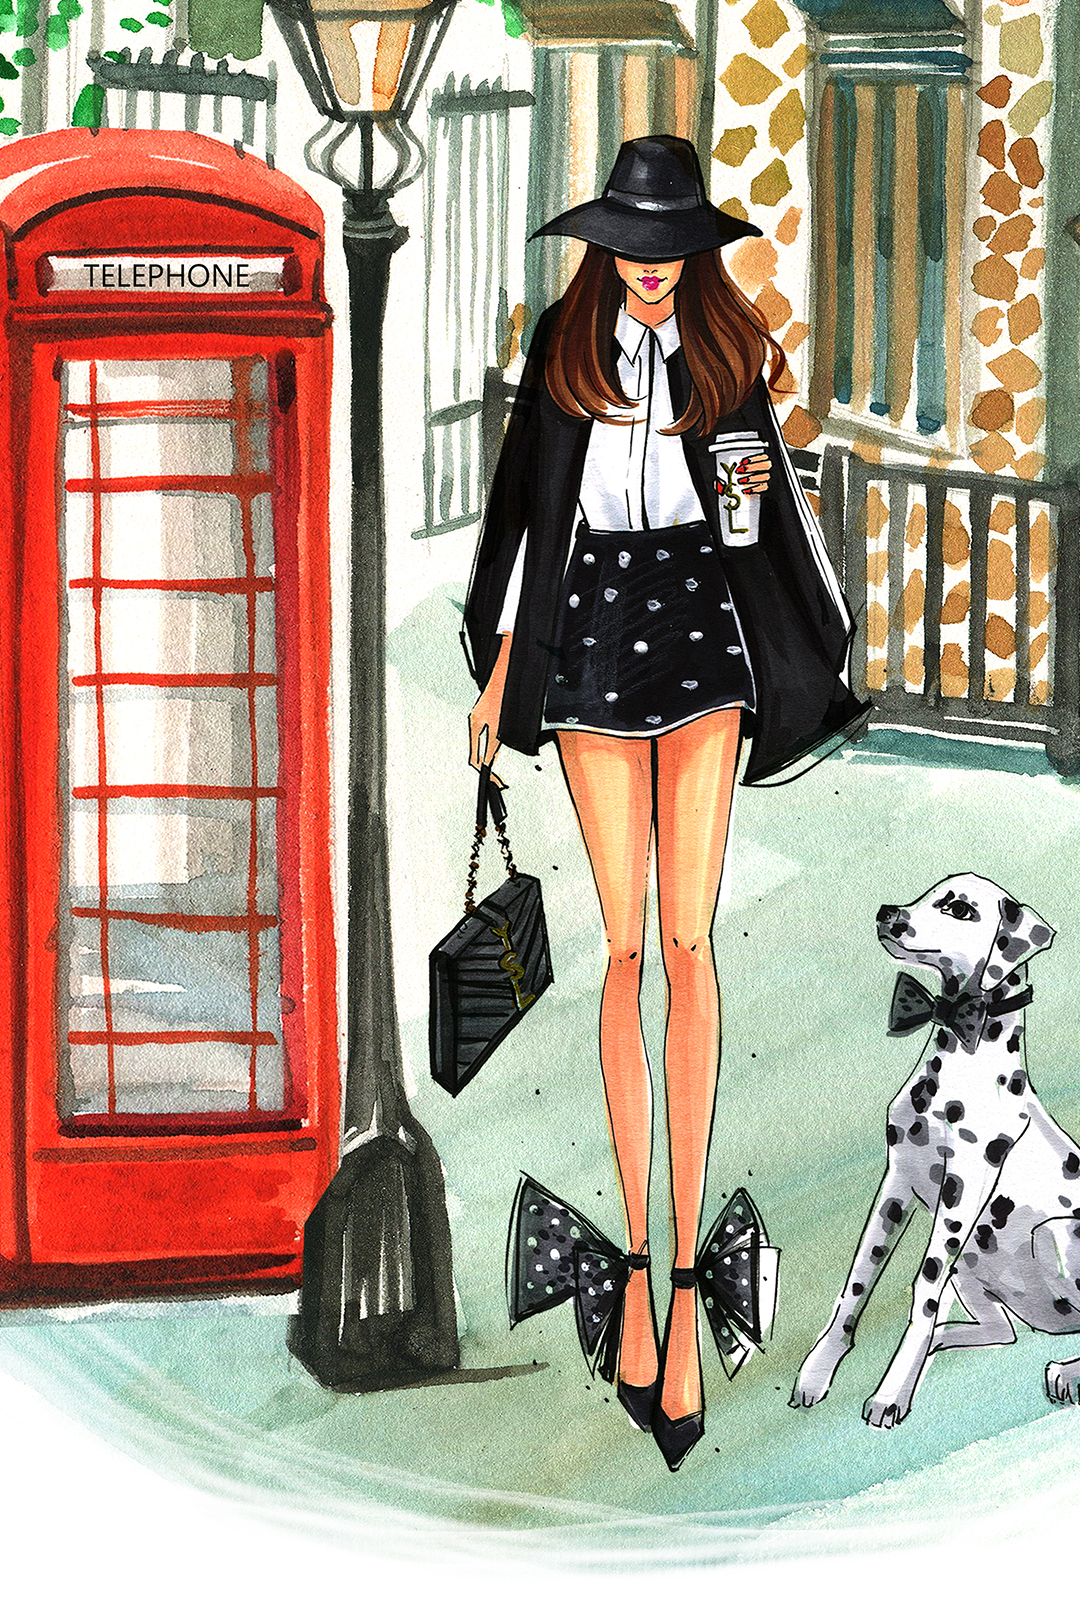 London fashion week illustration by Houston fashion illustrator Rongrong DeVoe